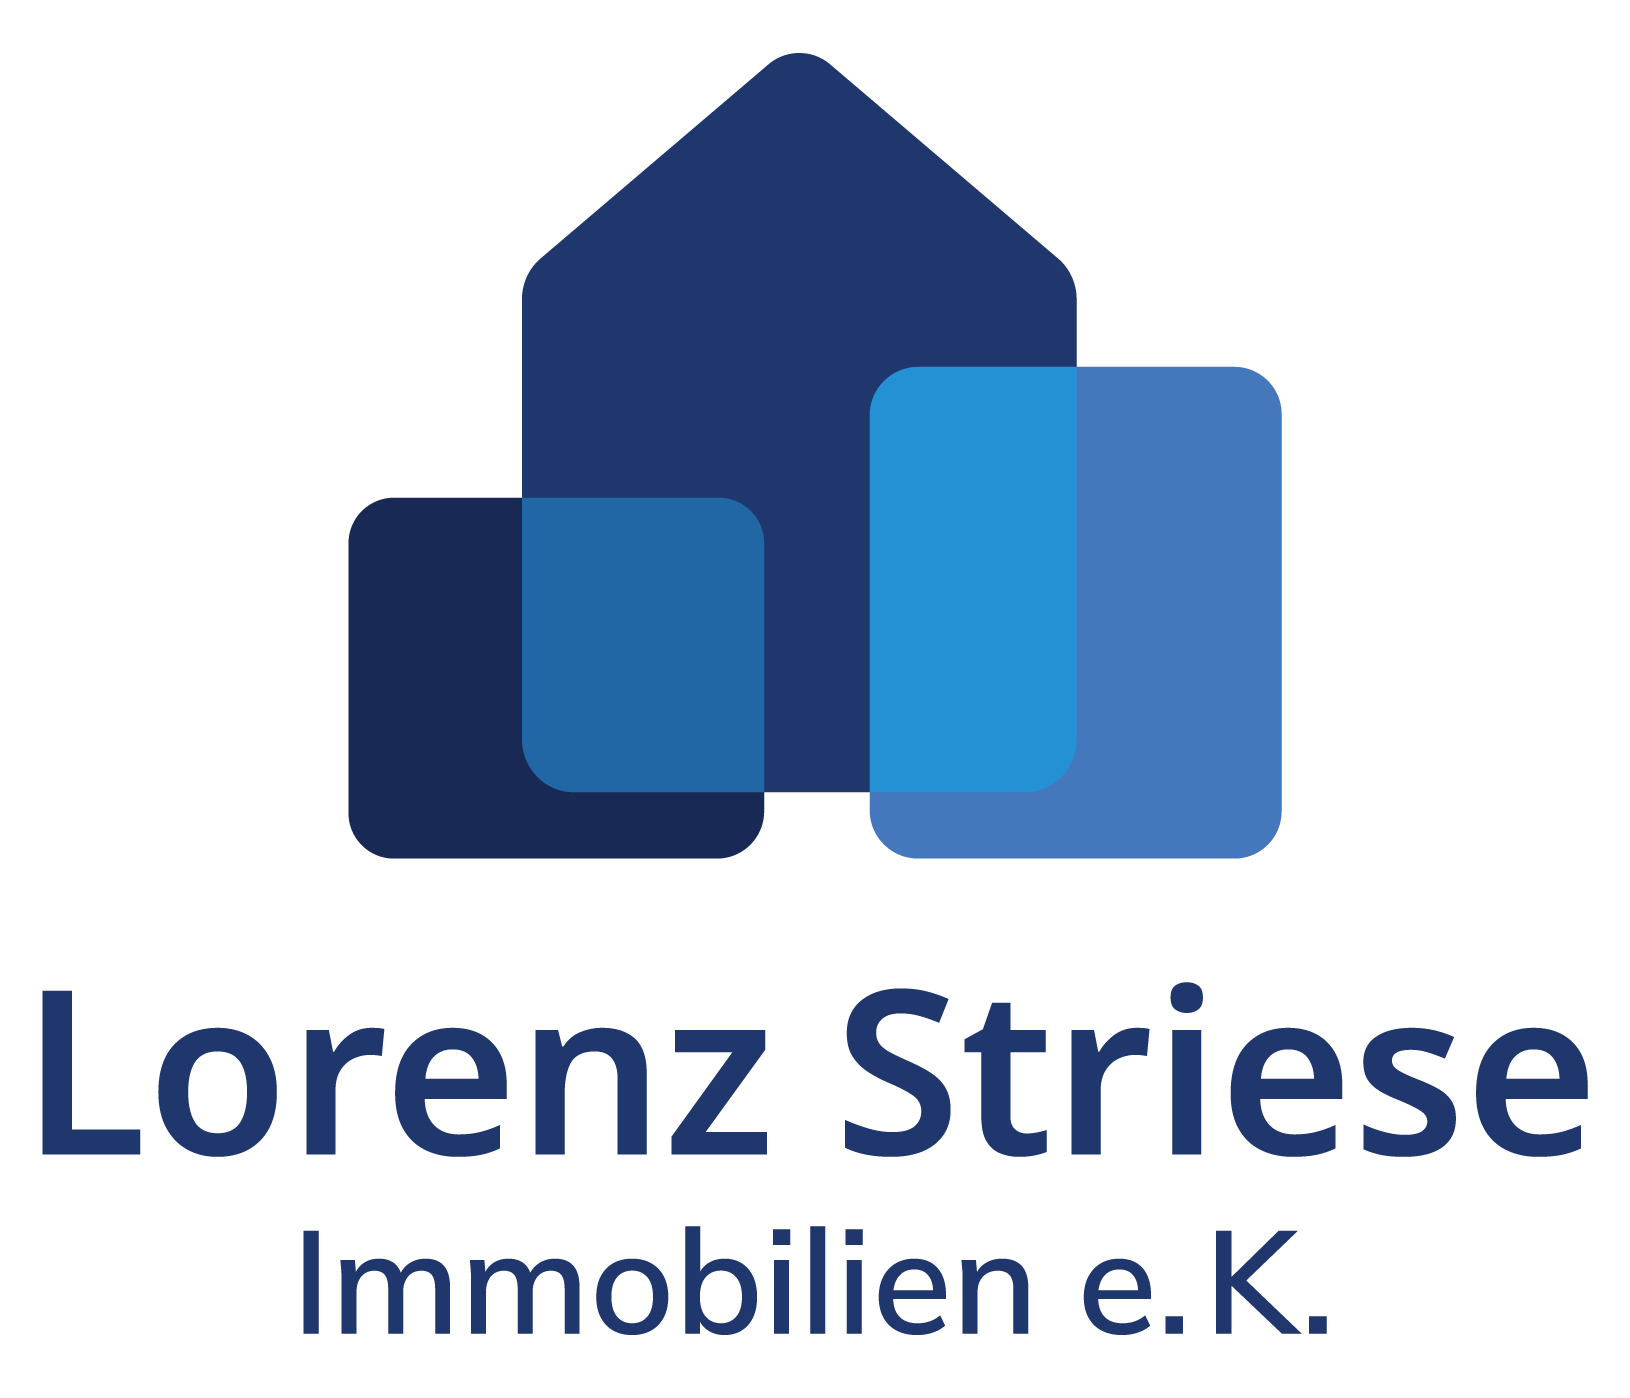 Lorenz Striese logo